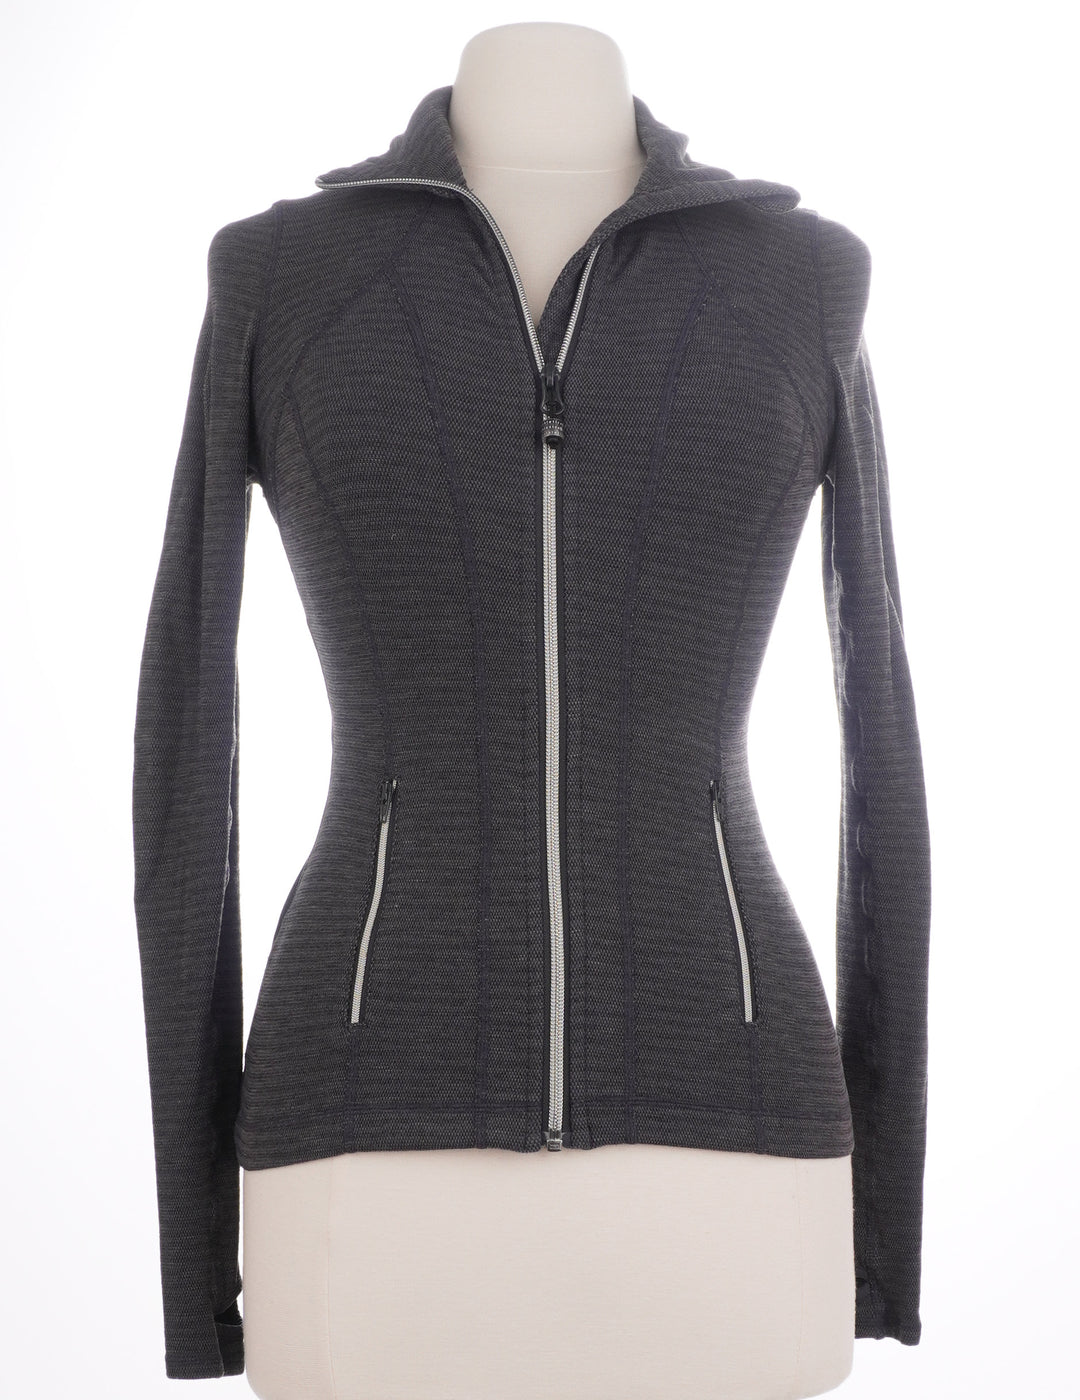 Lululemon Grey Pleated Zip Up Jacket - Size XX-Small